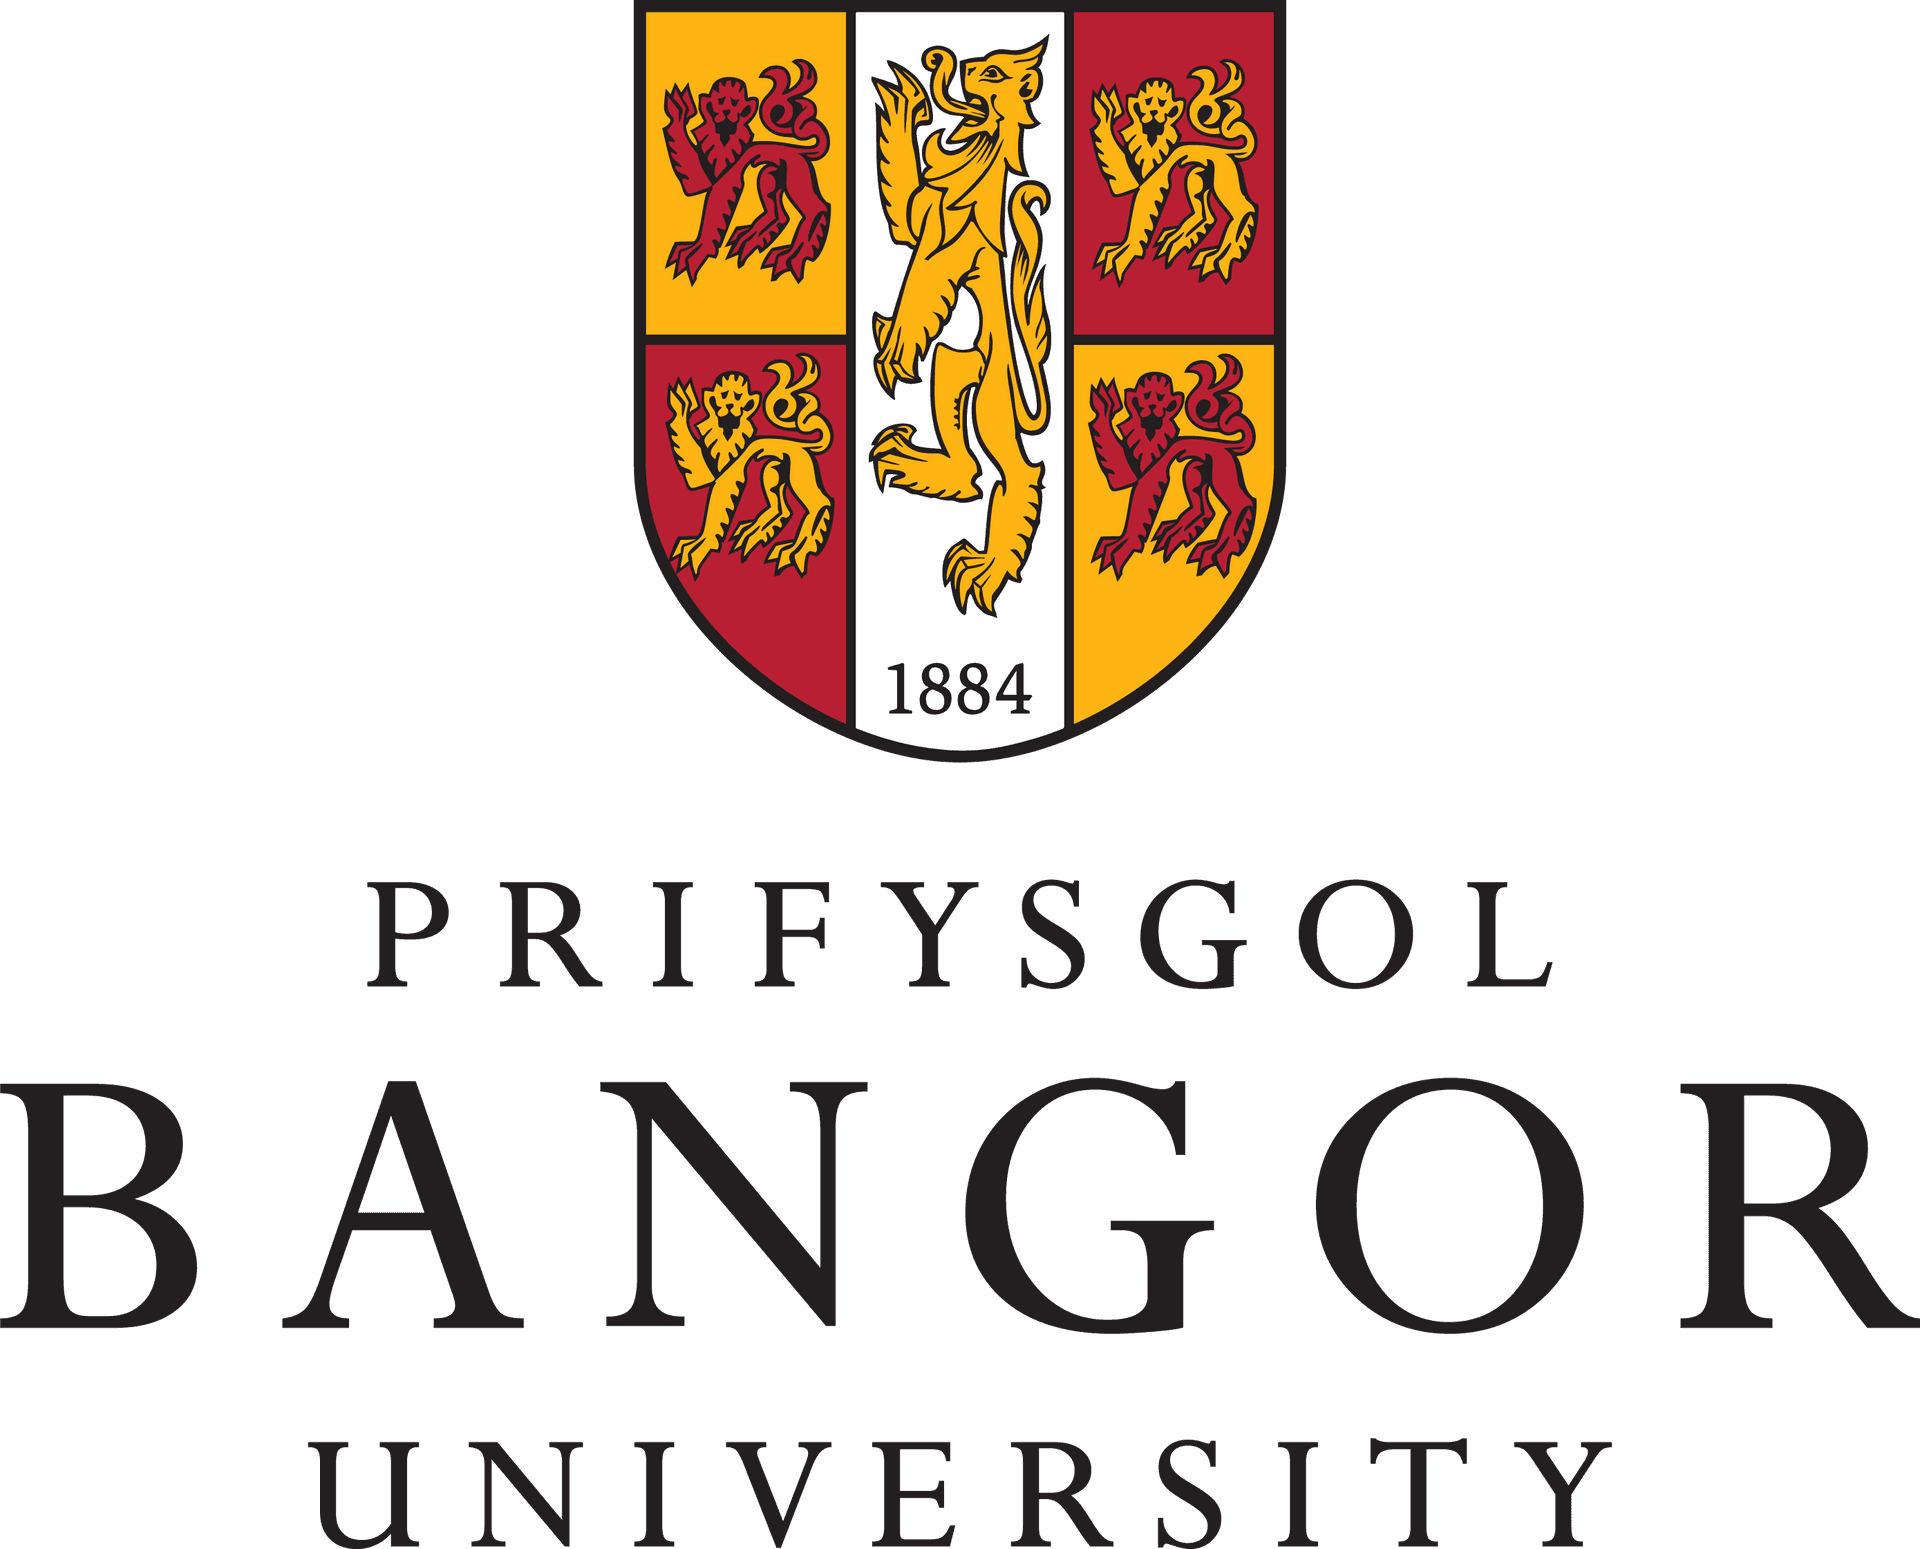 University of Wales Bangor